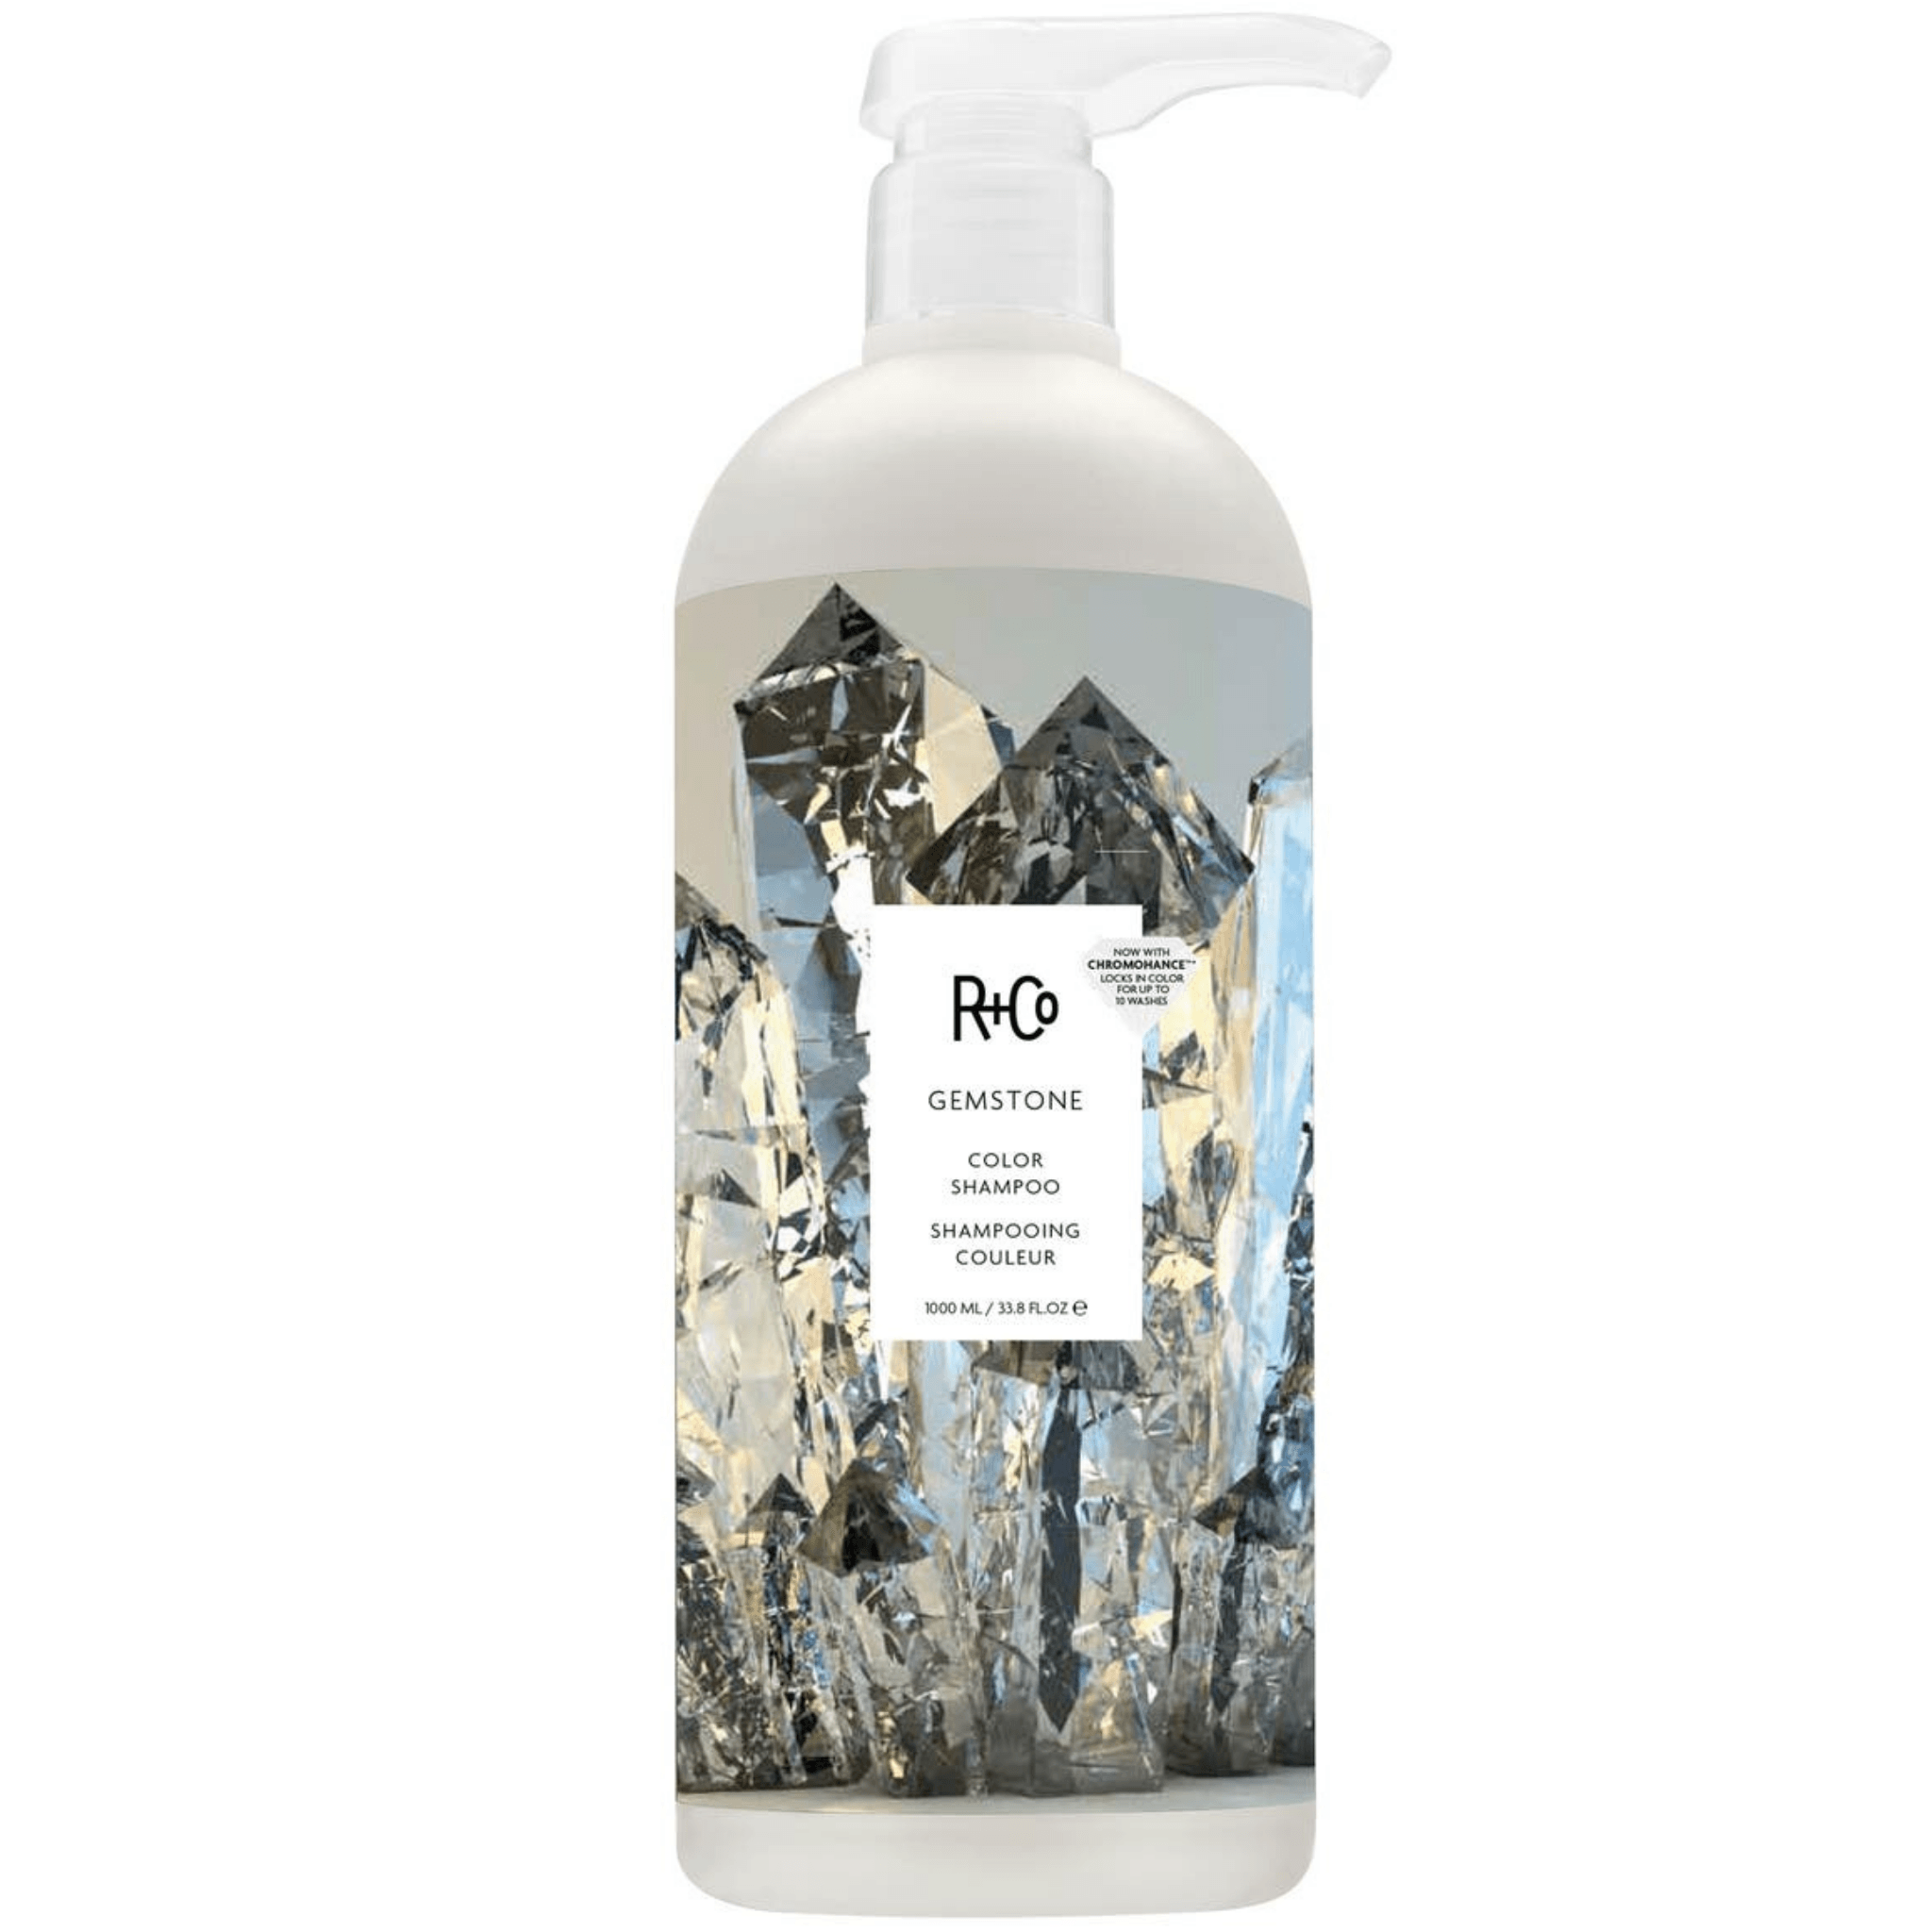 R+Co. Gemstone Shampoing Couleur - 1000 ml - Concept C. Shop